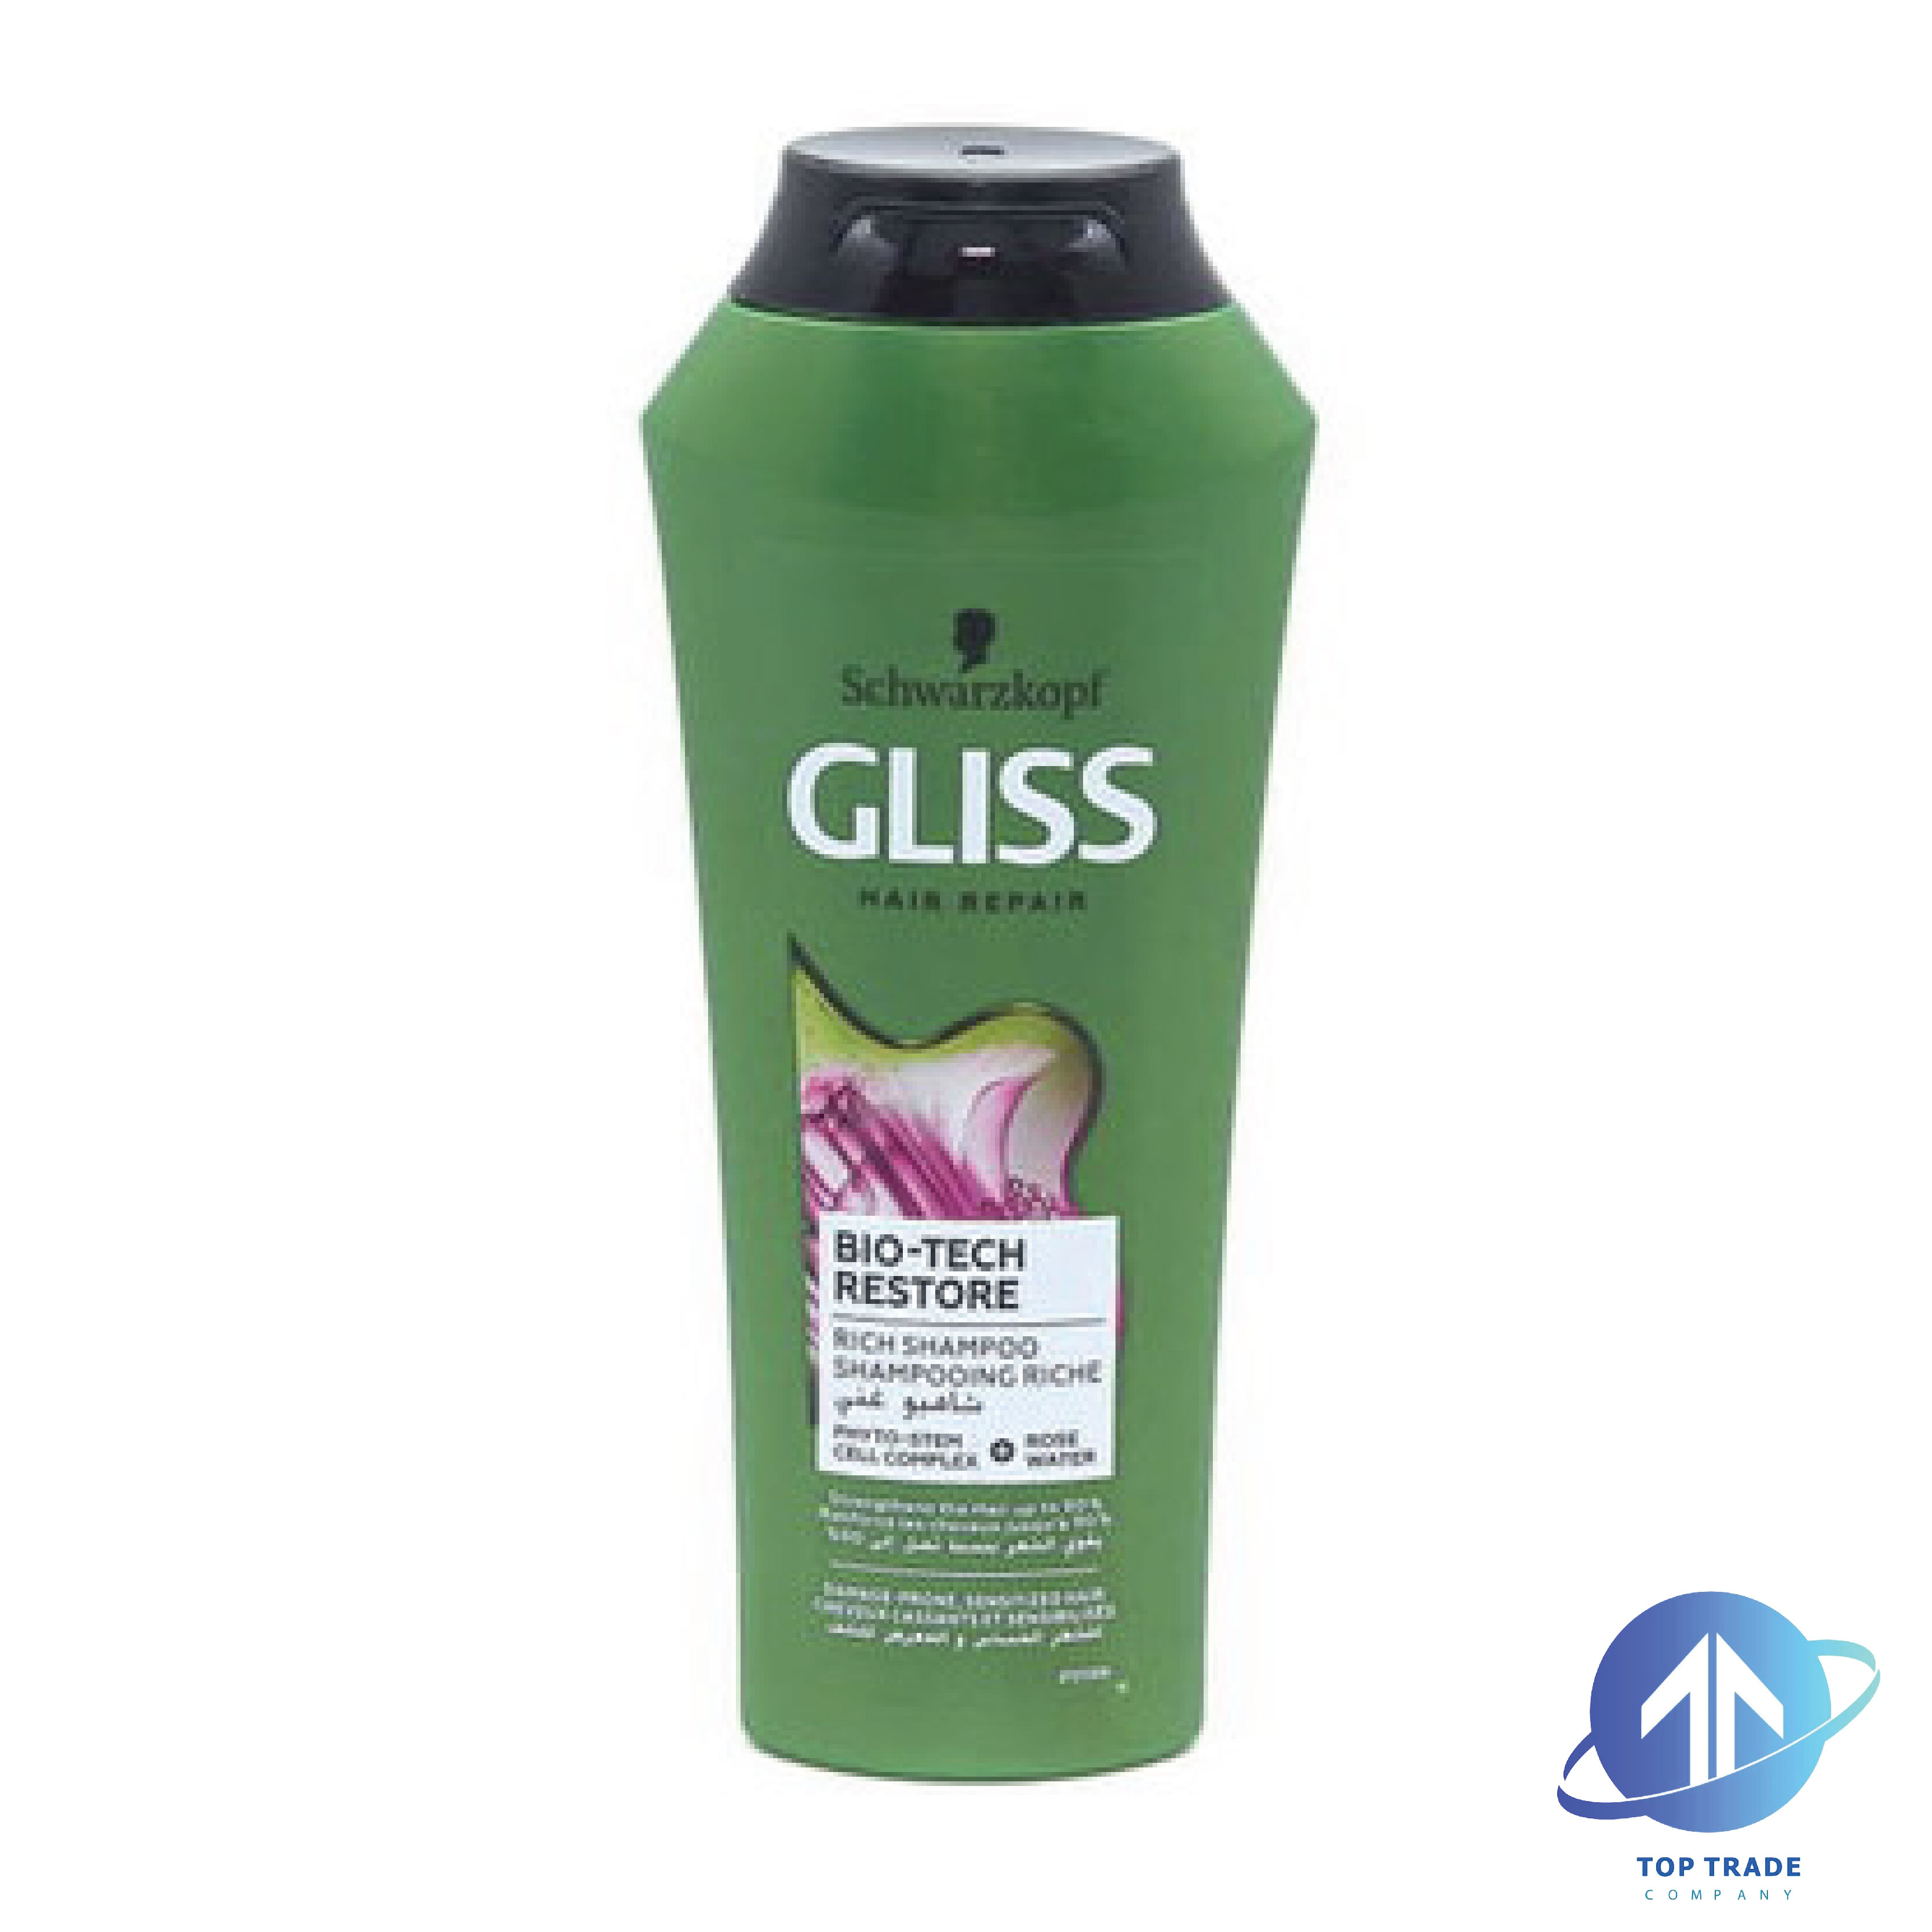 Gliss shampoo Bio-Tech Restore Rose Water 250ml